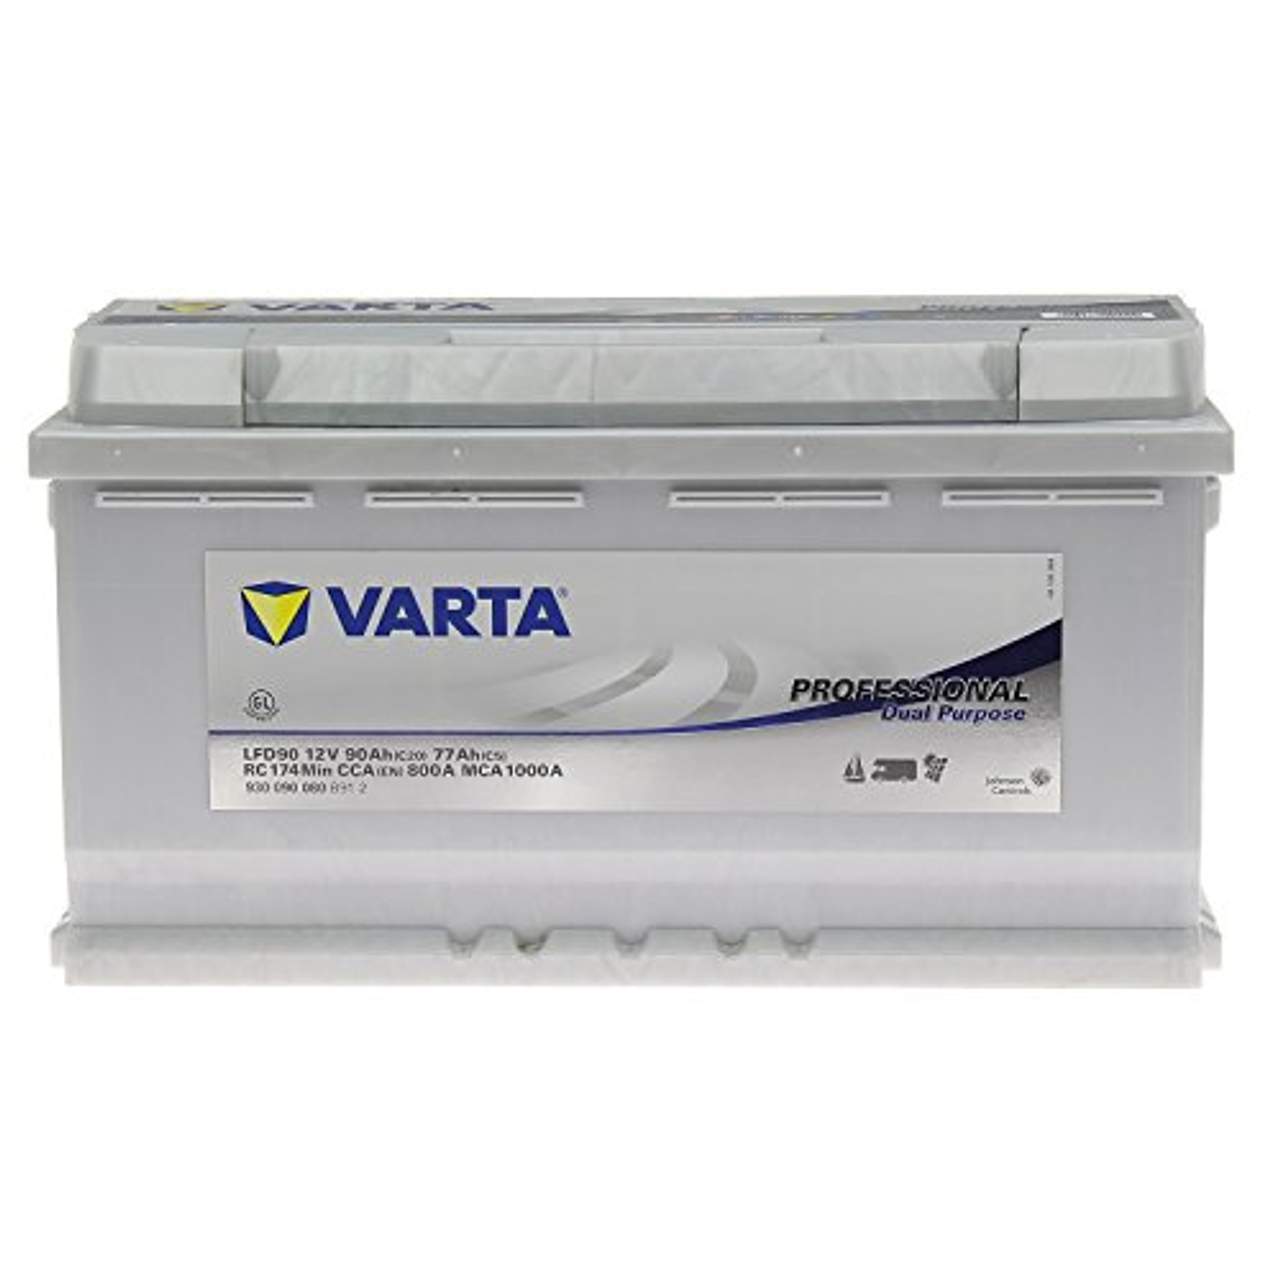 Varta LFD90 Professional Boot Wohnmobil Solar Versorgungsbatterie